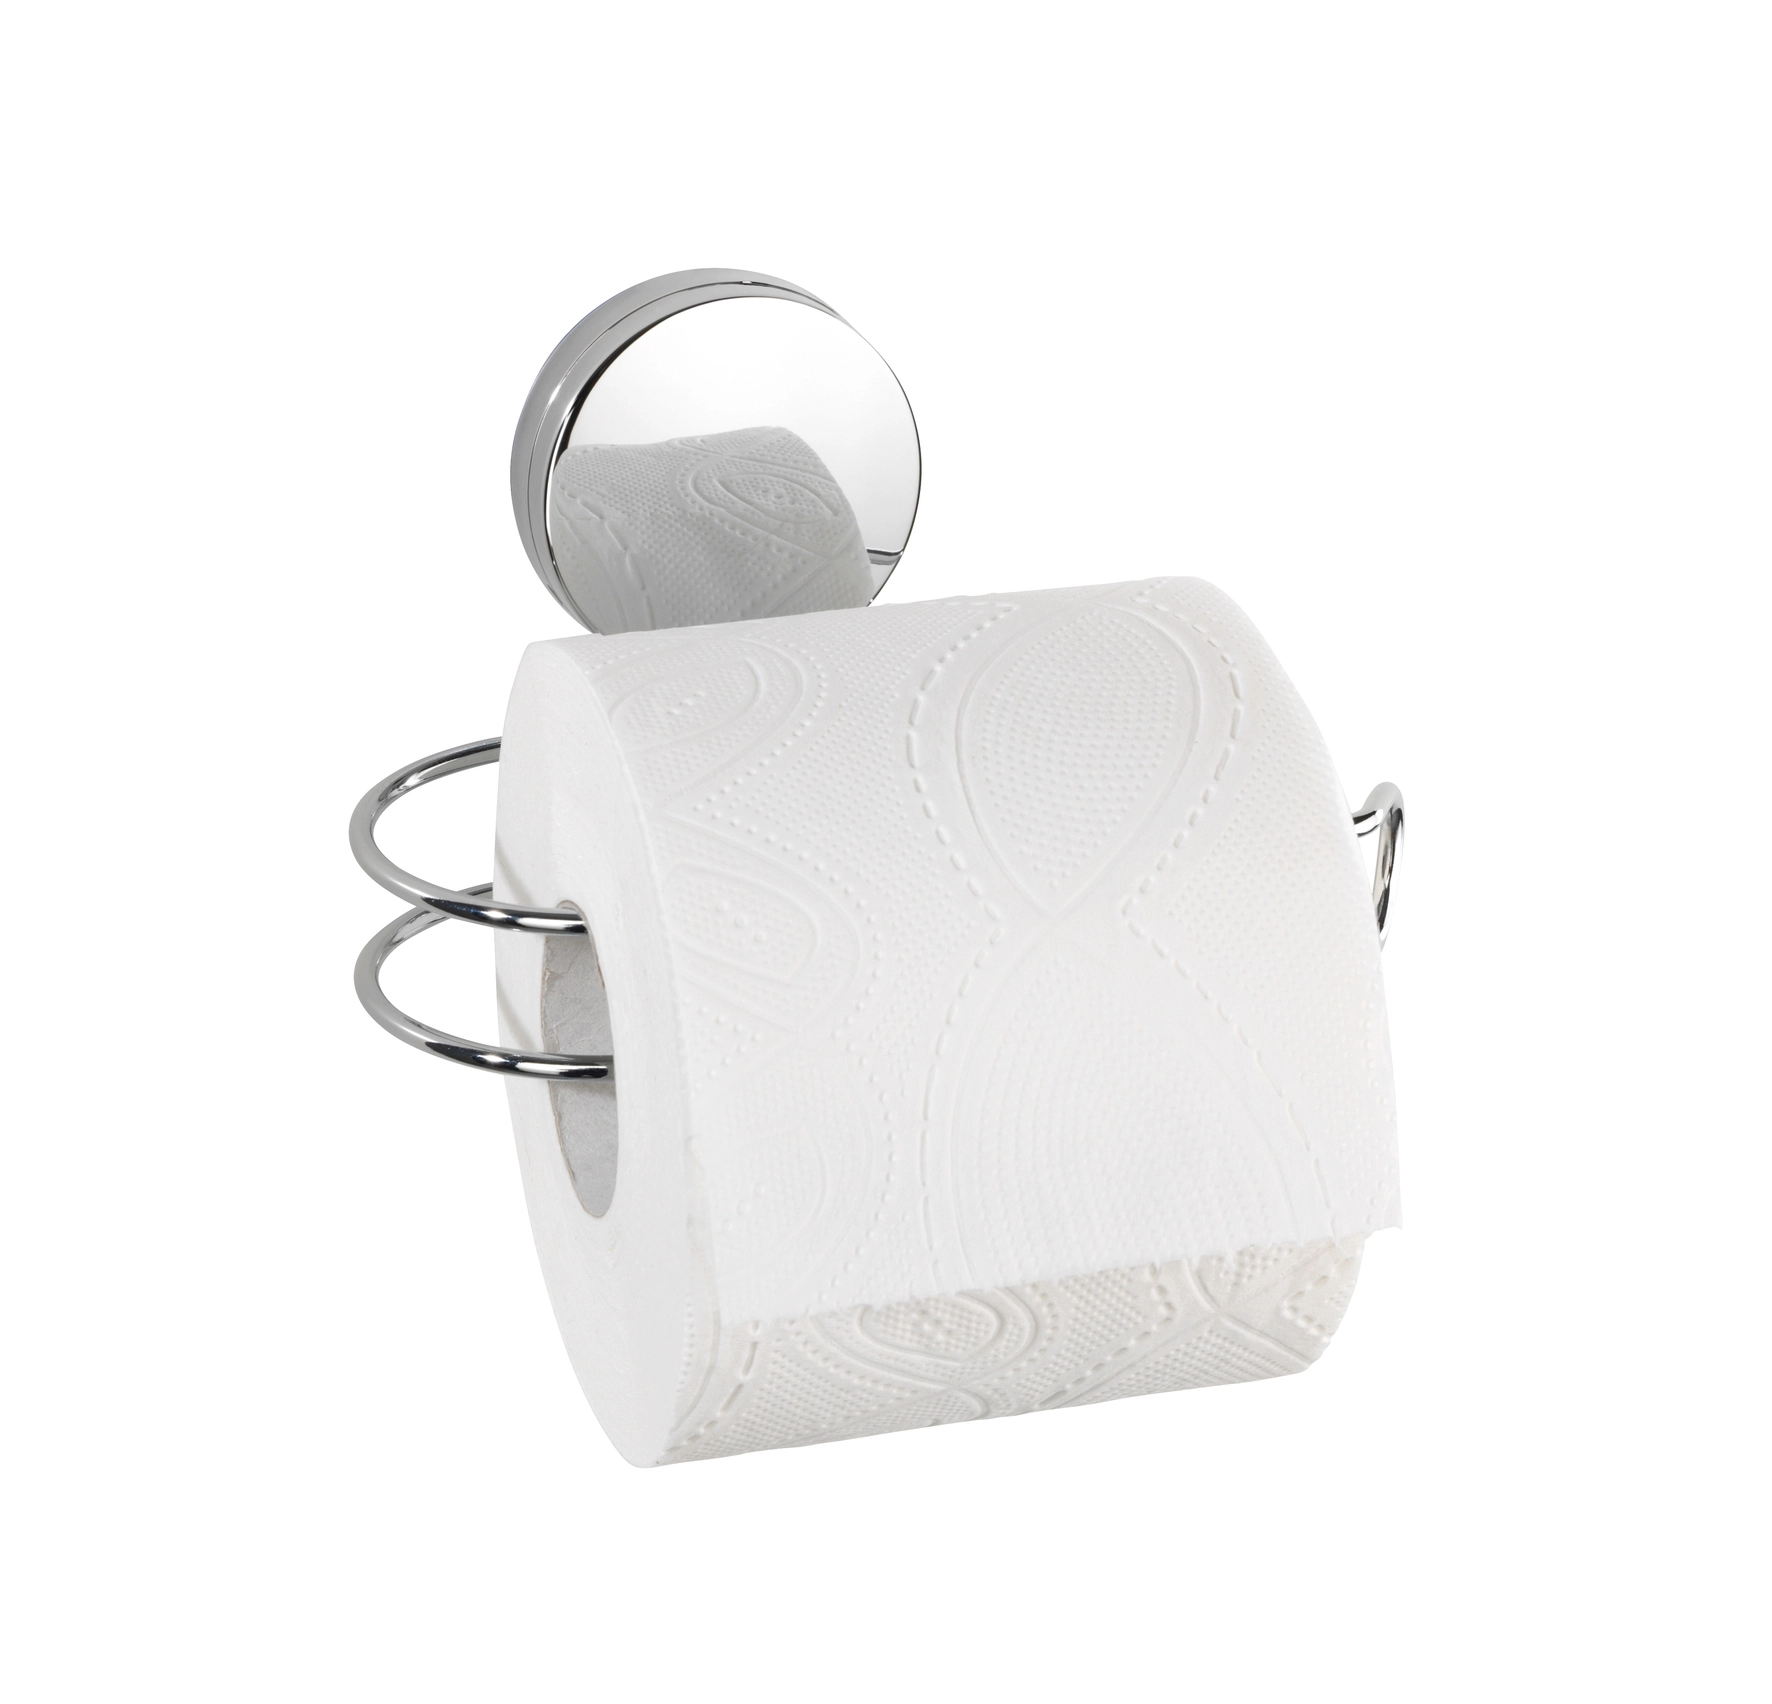 Wenko Static-Loc Plus Toilettenpapierhalter Osimo Chrom kaufen bei OBI